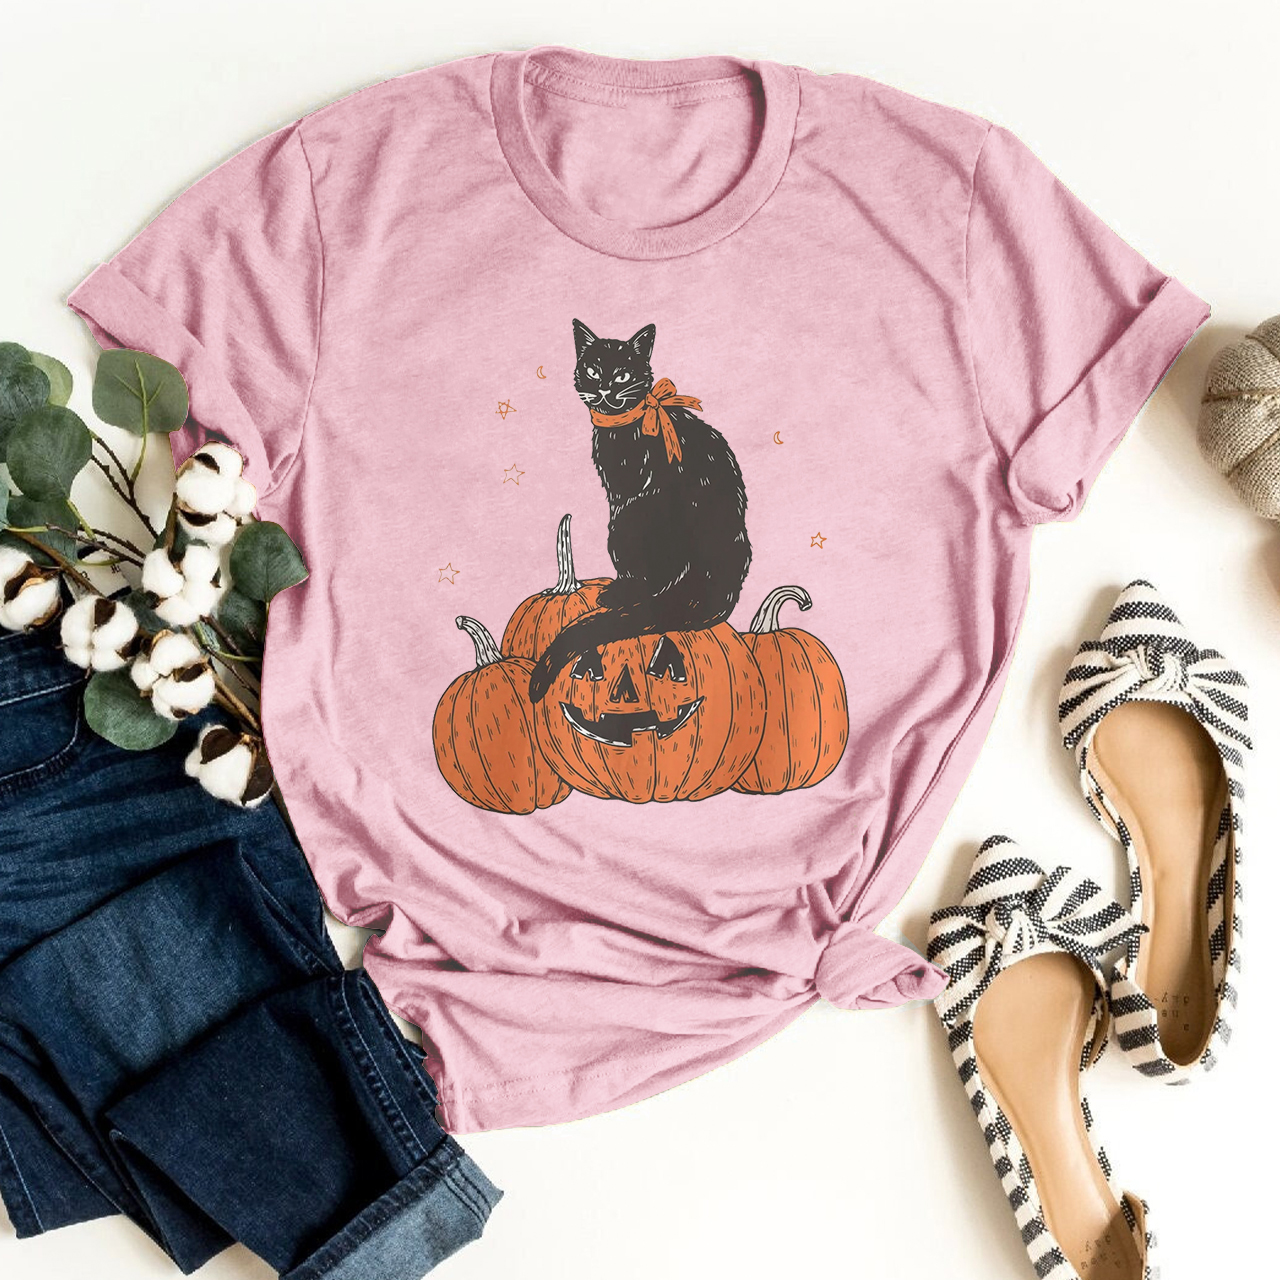 Black Cat on Pumpkin Shirt For Her